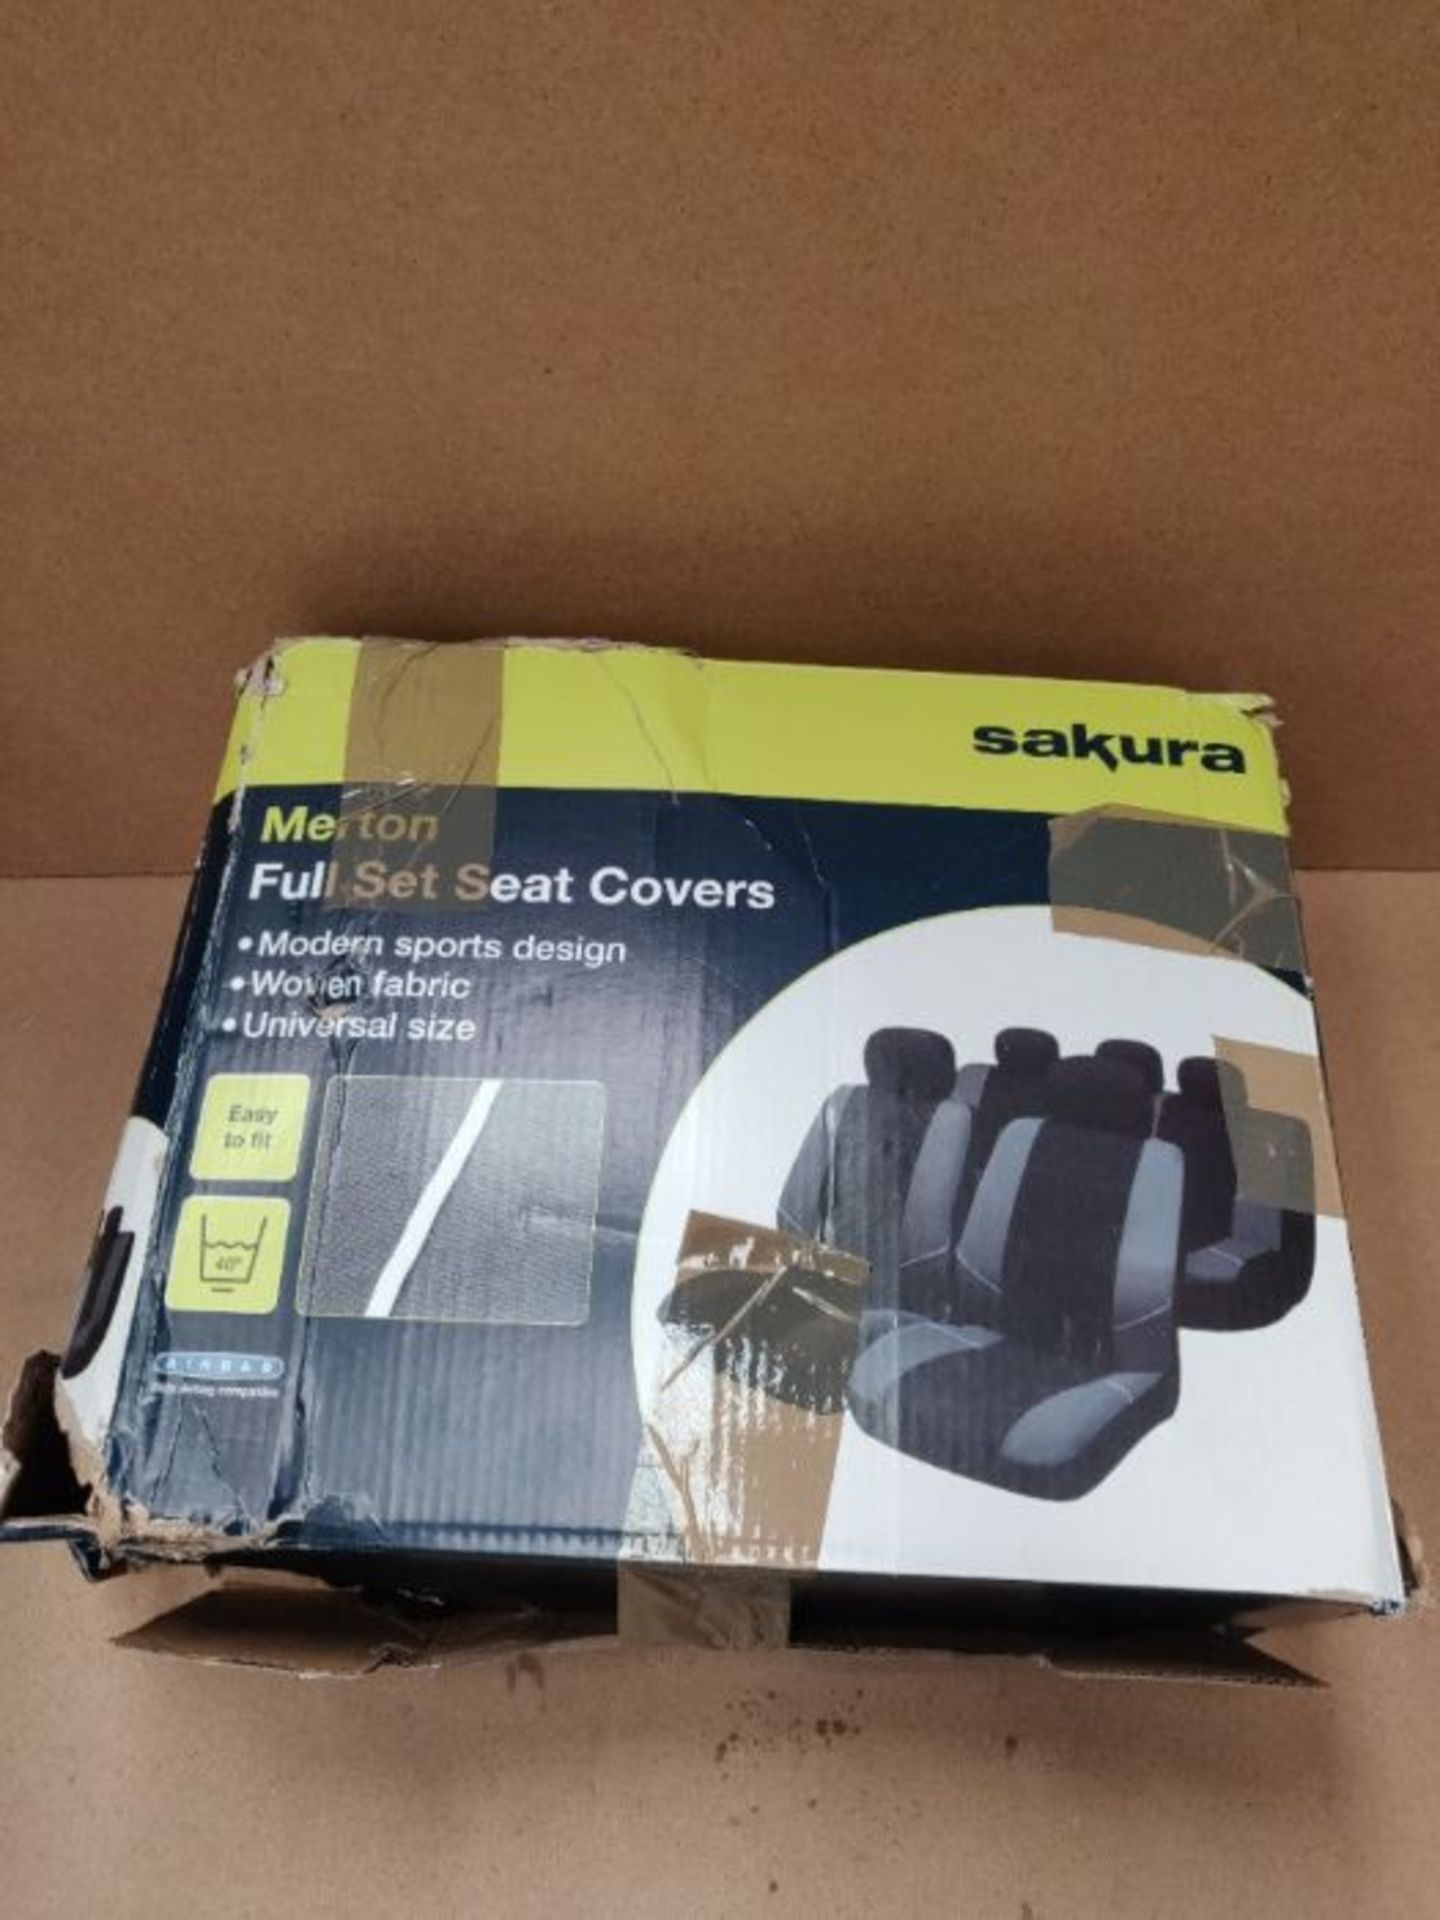 Sakura 'Merton' Black/Grey Seat And Headrest Covers BY0802 - Full Set Universal Fit El - Image 2 of 3